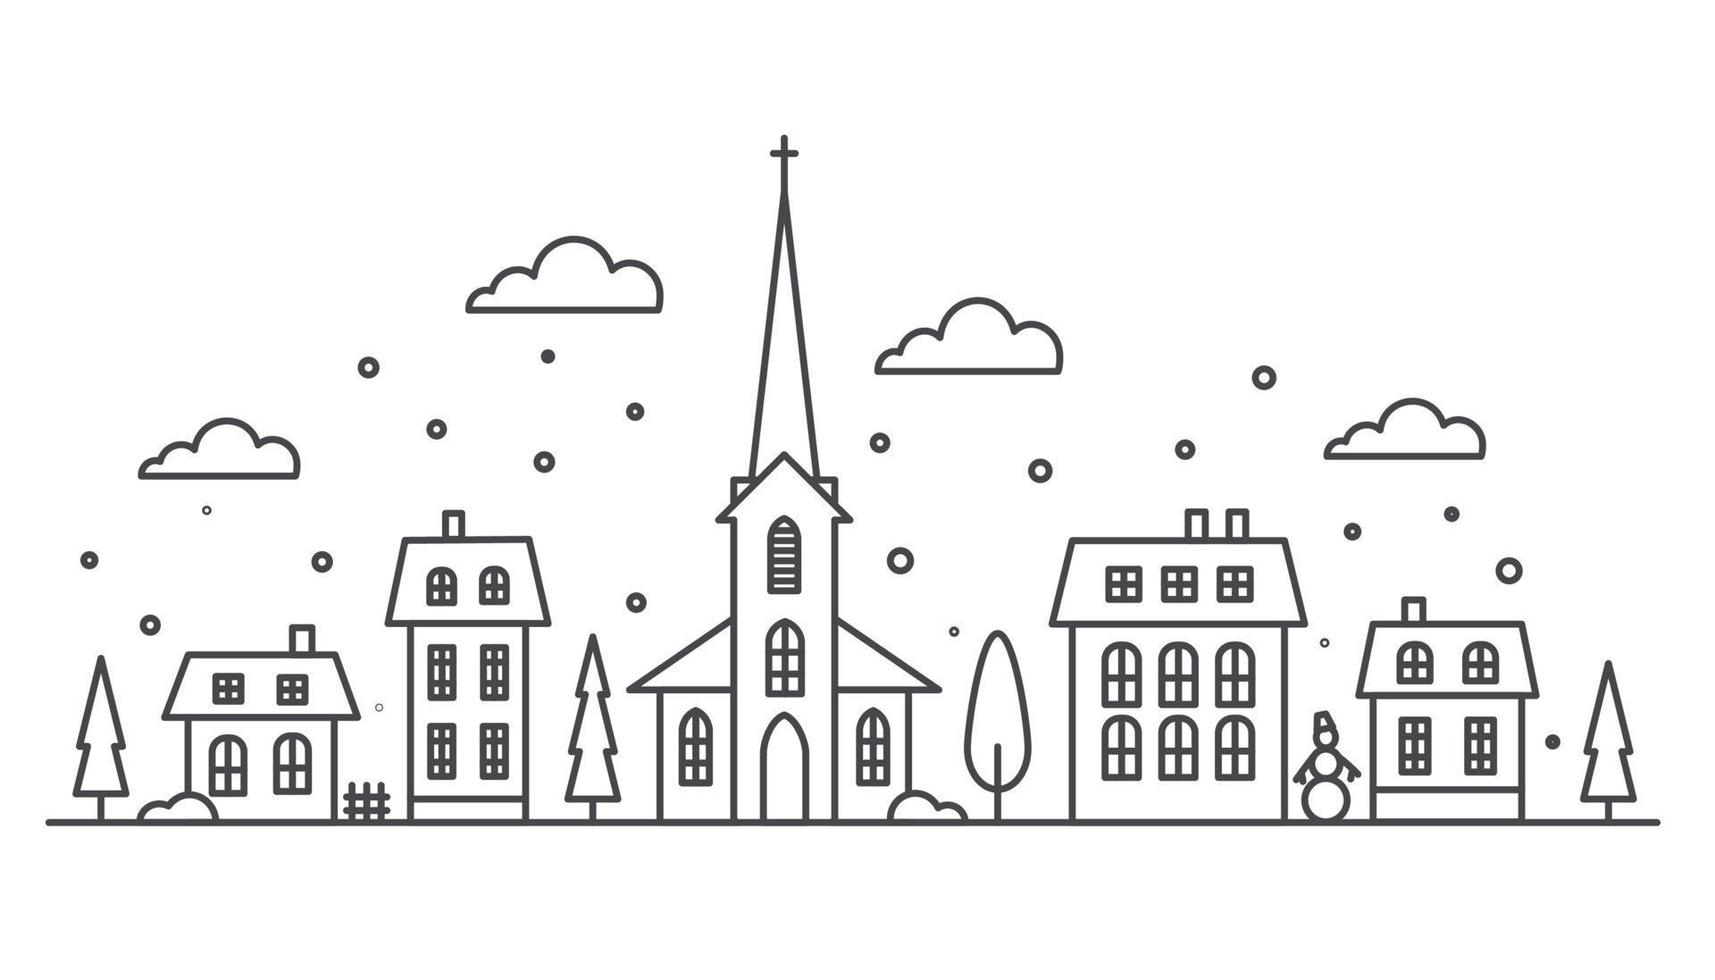 paisaje invernal del barrio suburbano. silueta de casas e iglesia en el horizonte con copos de nieve. casas de campo. ilustración vectorial de contorno. vector